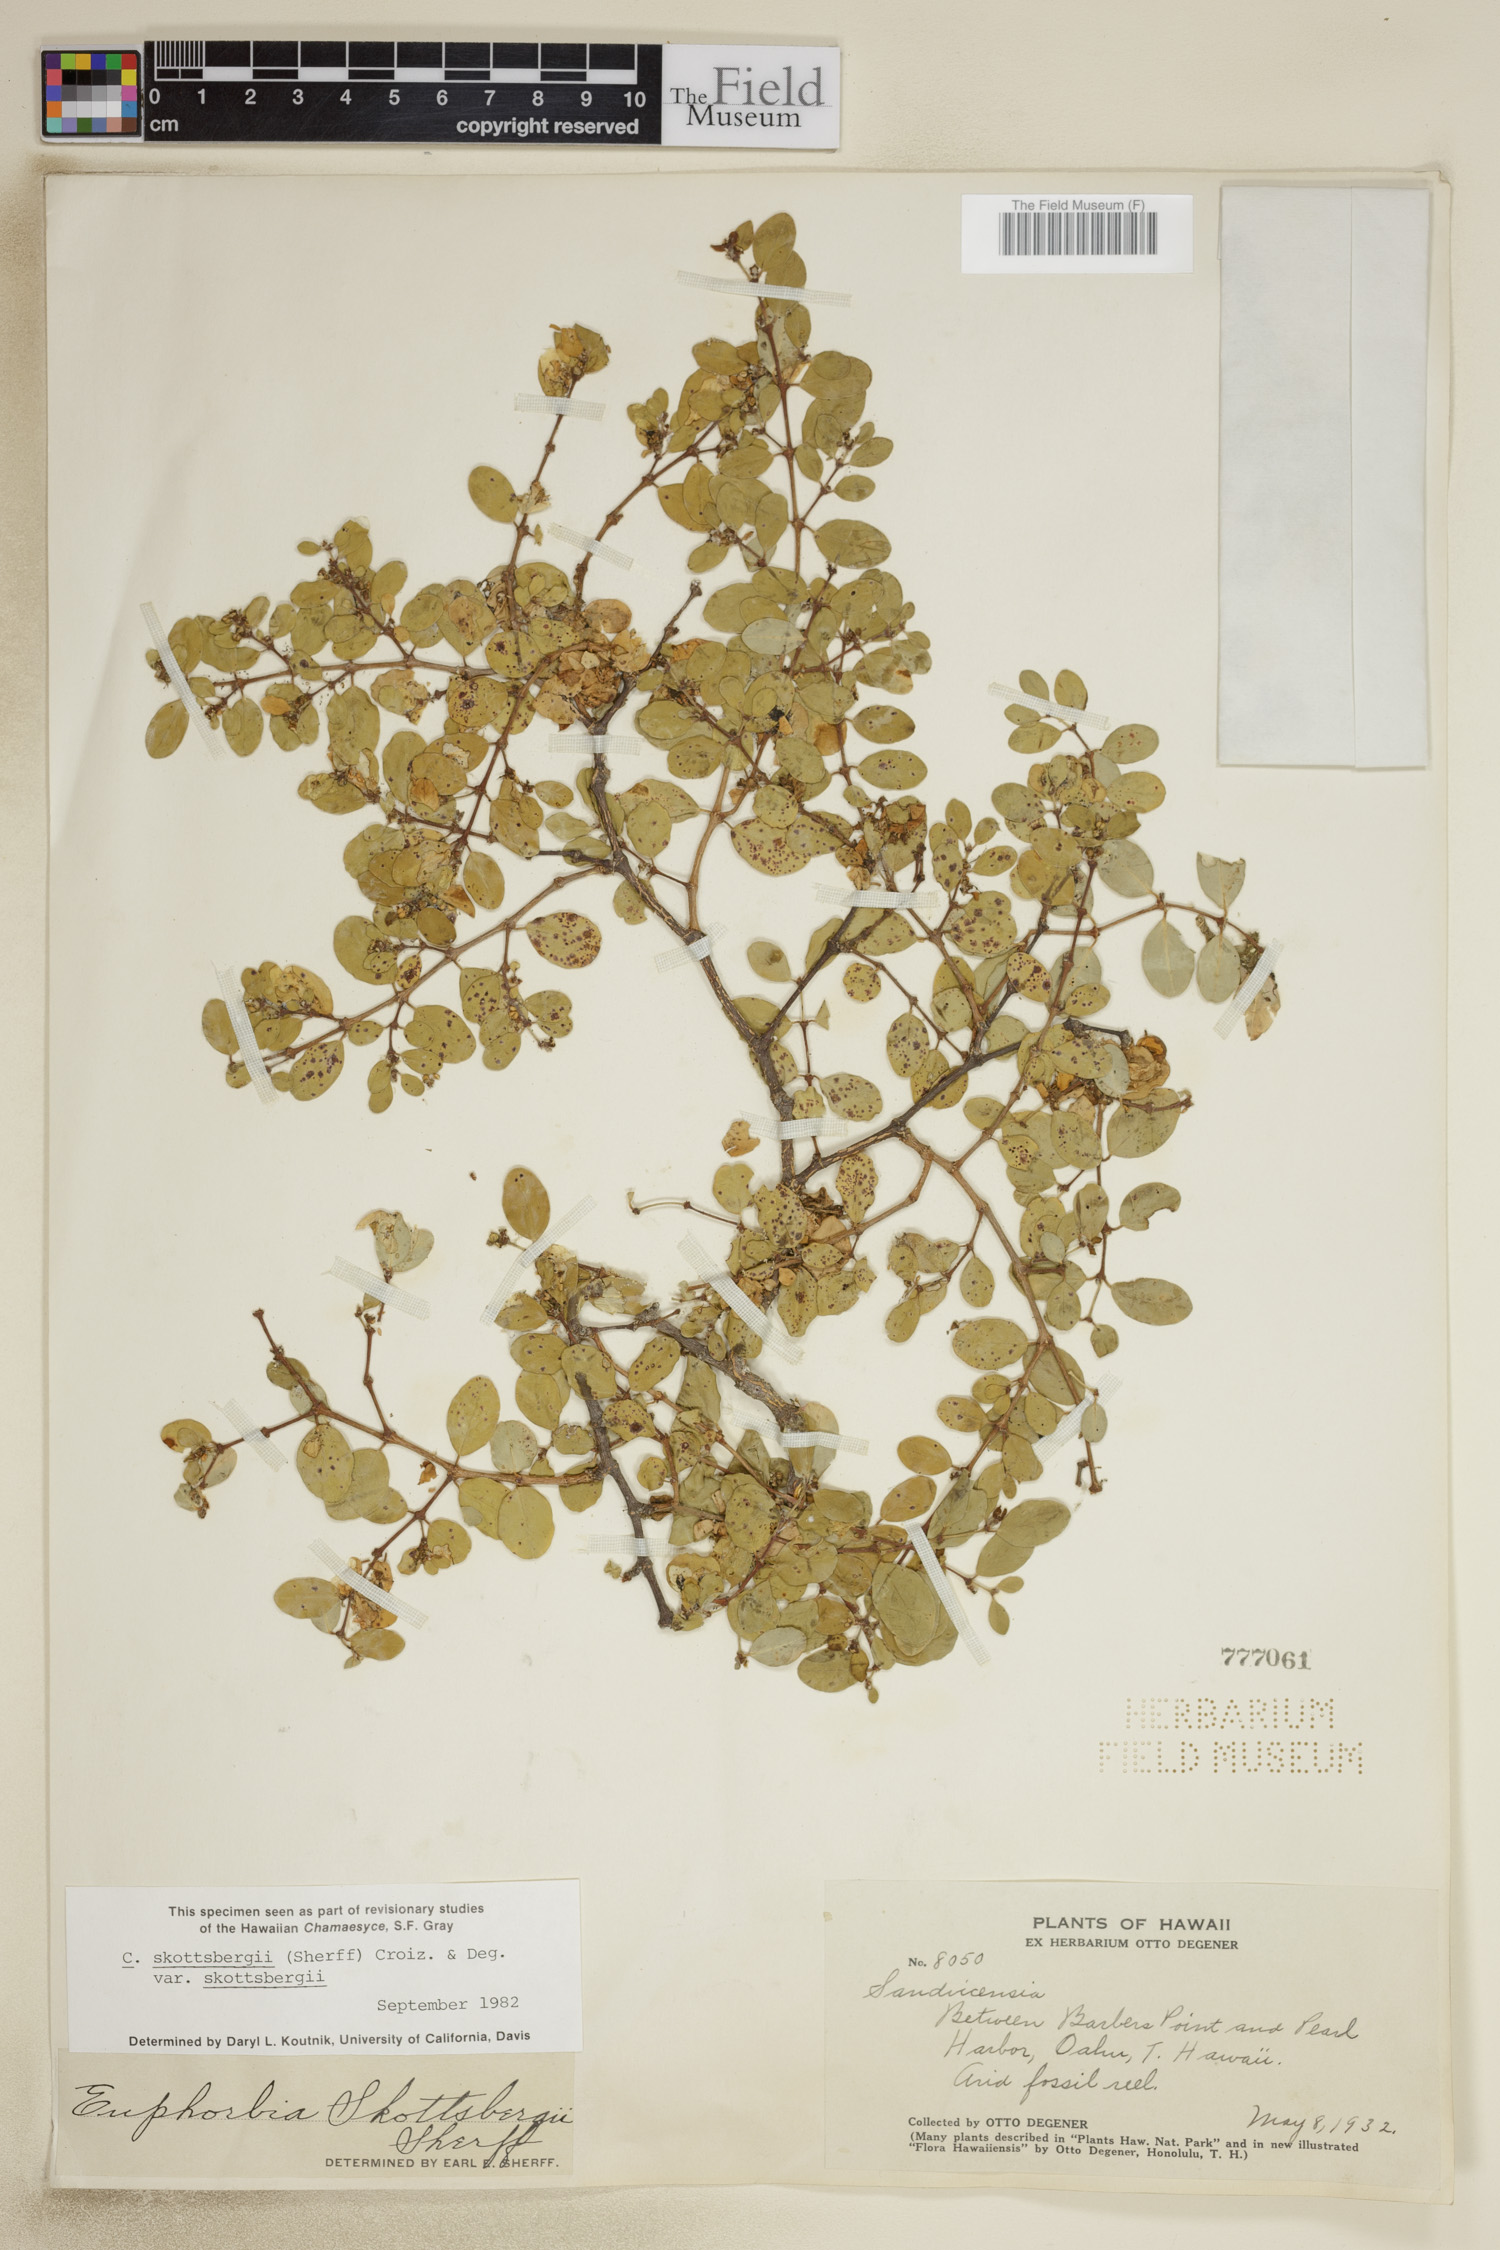 Euphorbia skottsbergii image